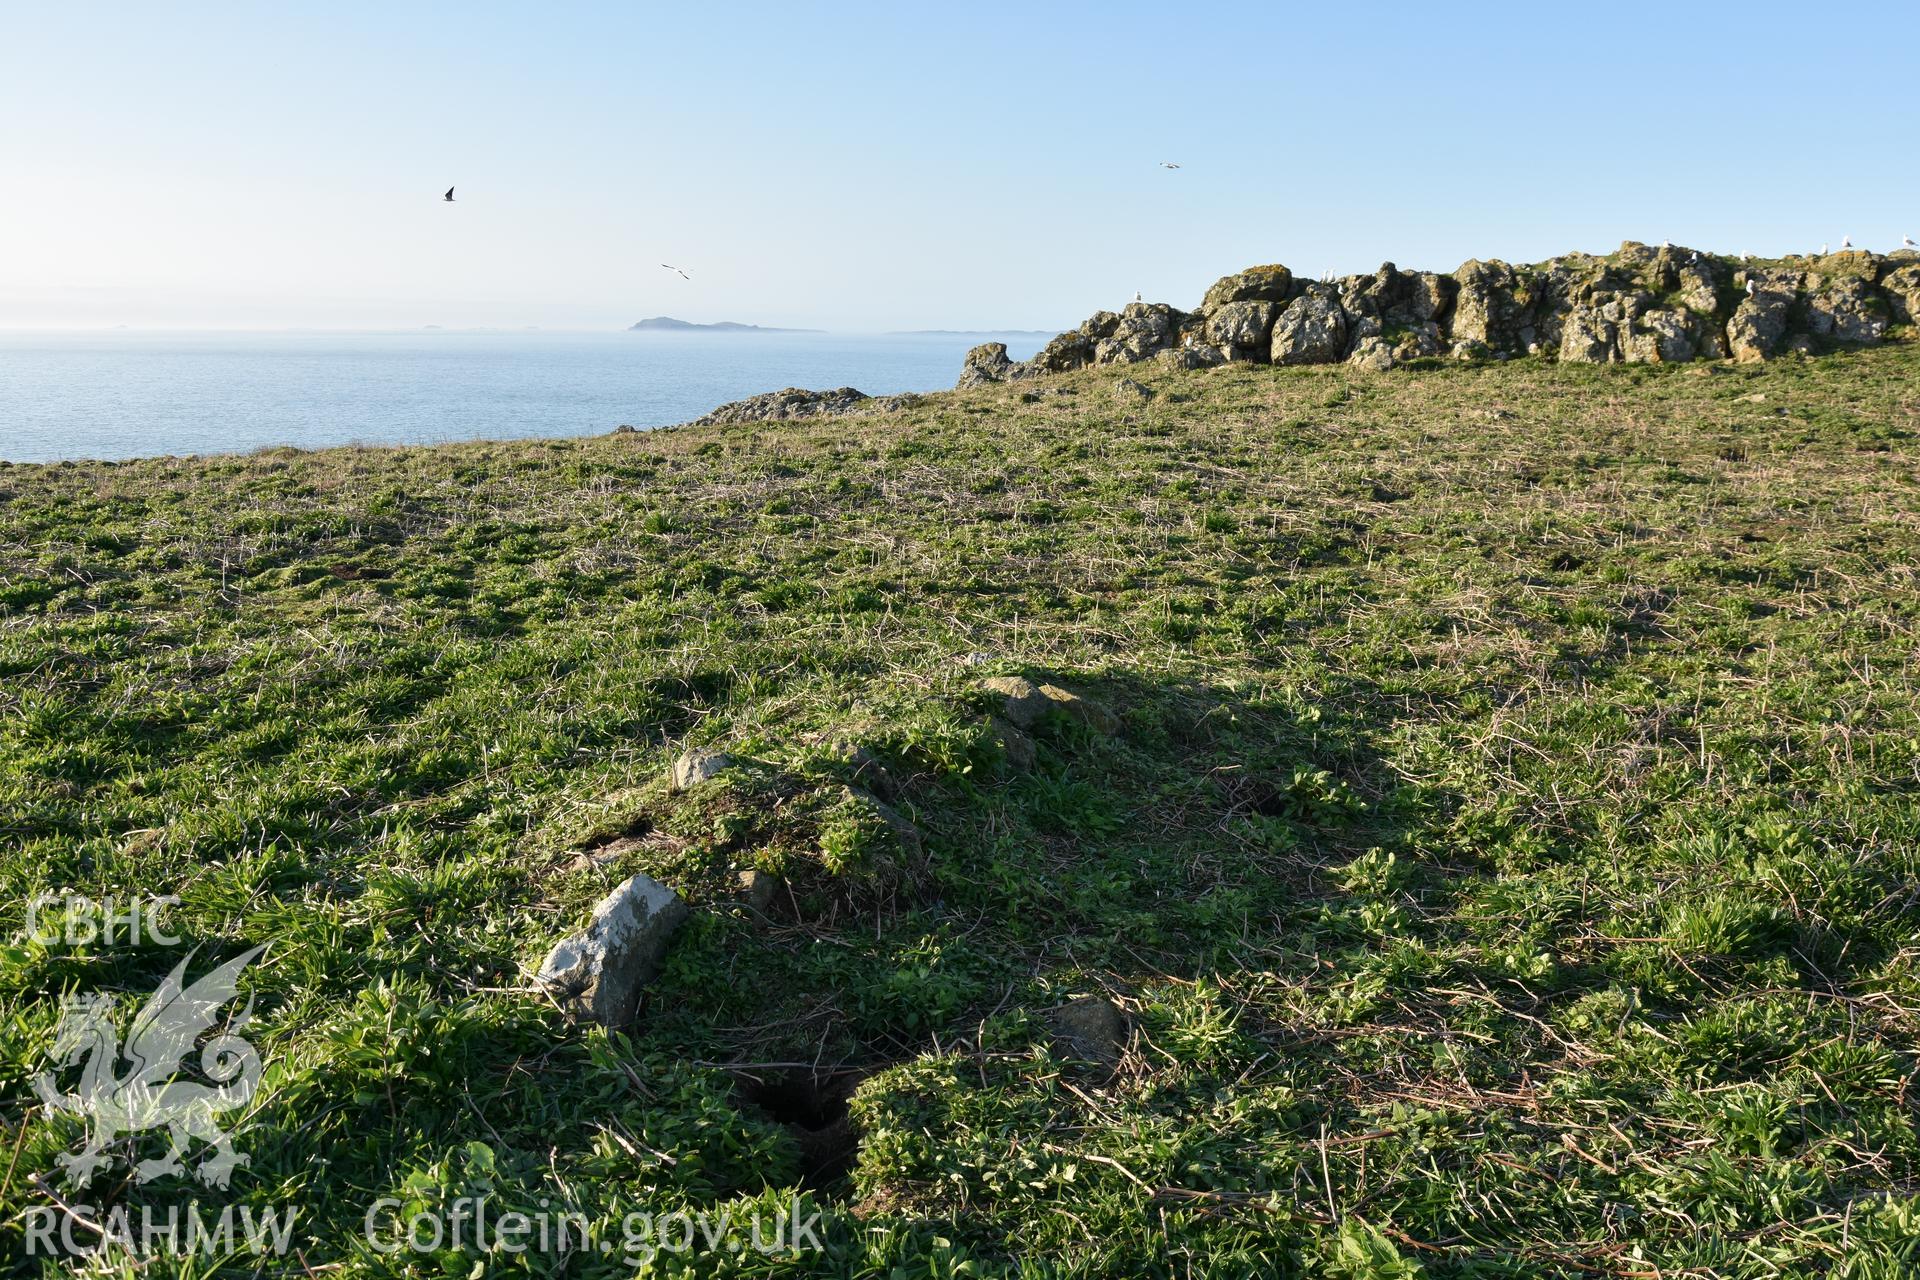 Skomer Island cairn group 1. Field survey 19 April 2018. Cairn C